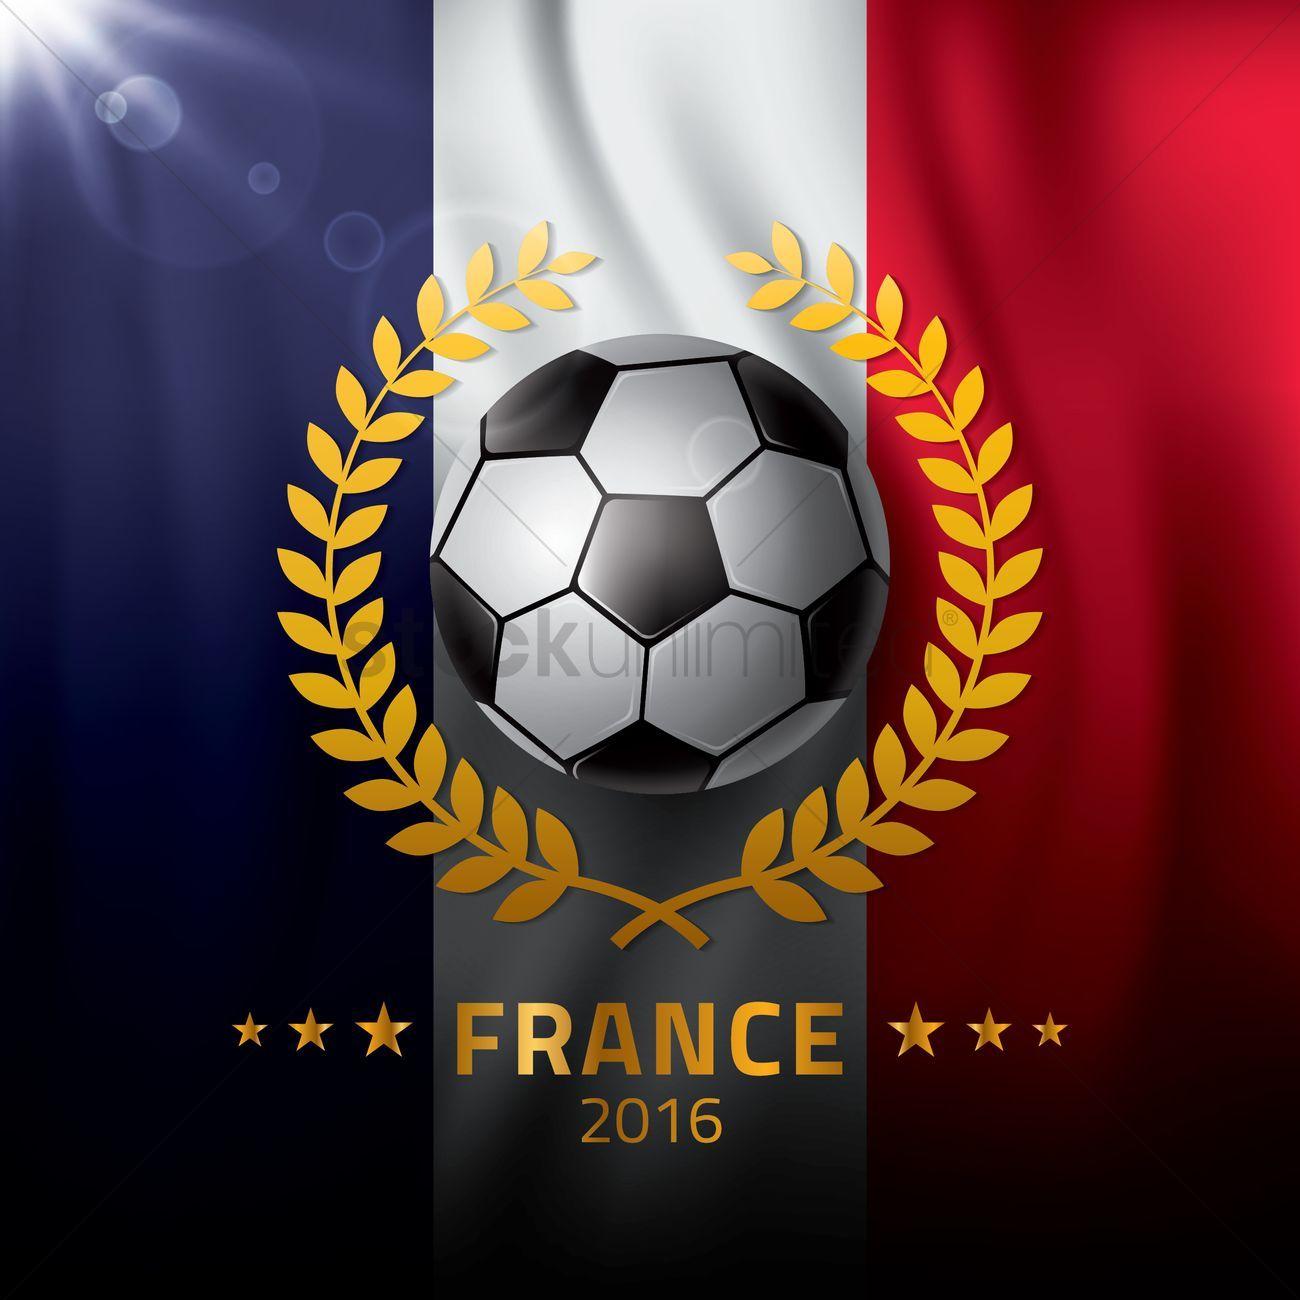 France soccer wallpaper Vector Image